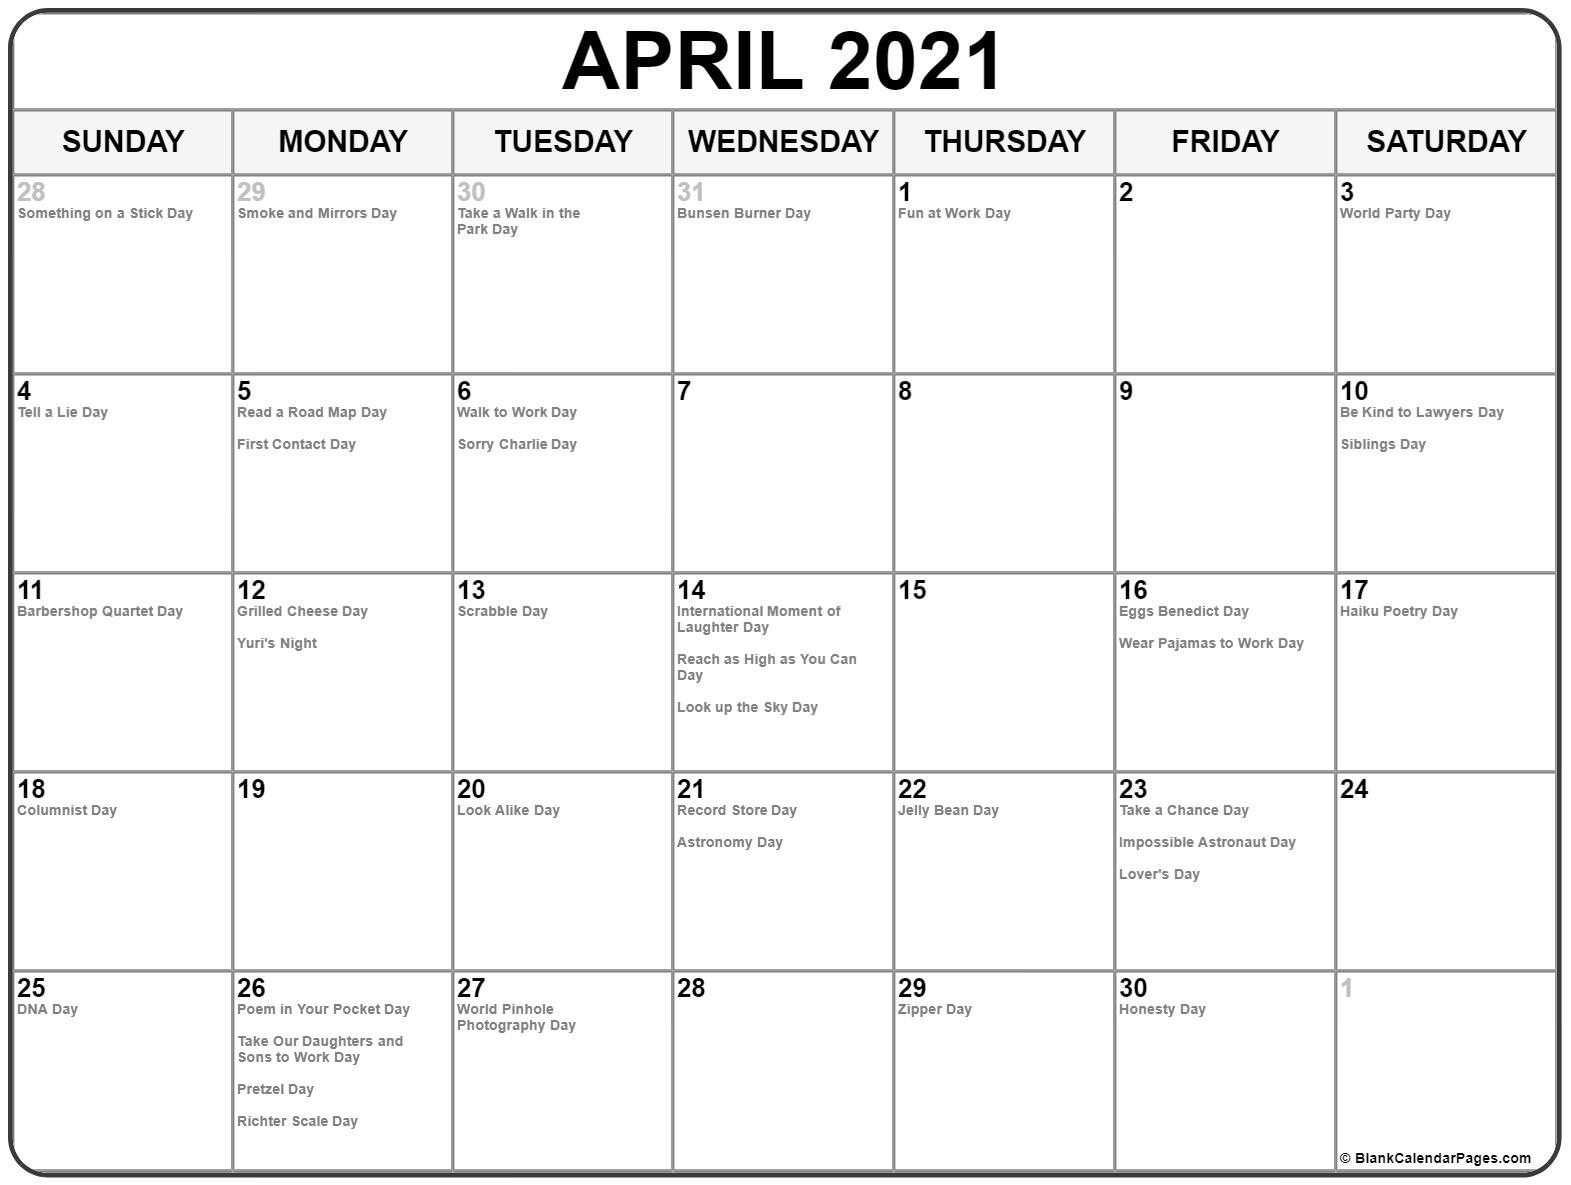 Free Printable April 2021 Calendar with Holidays Collection Of April 2021 Calendars with Holidays